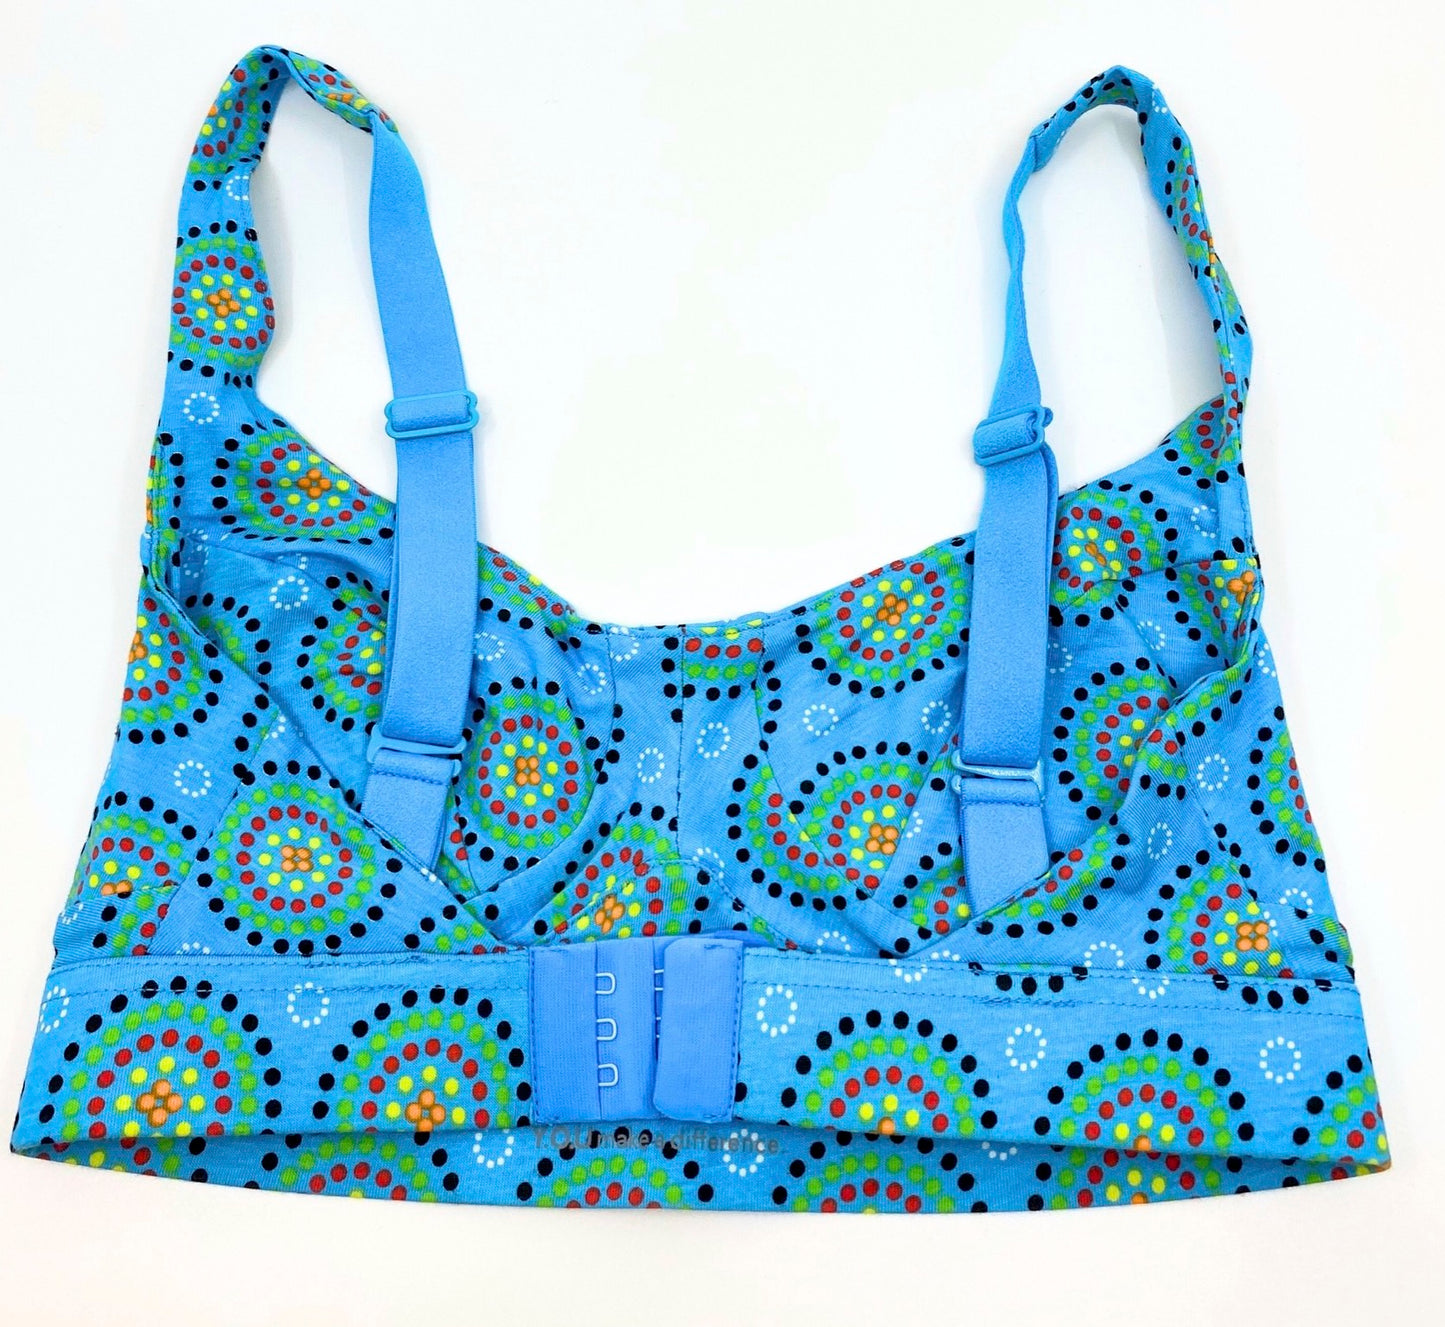 Women's organic cotton bra in blue Mara print - more supportive style